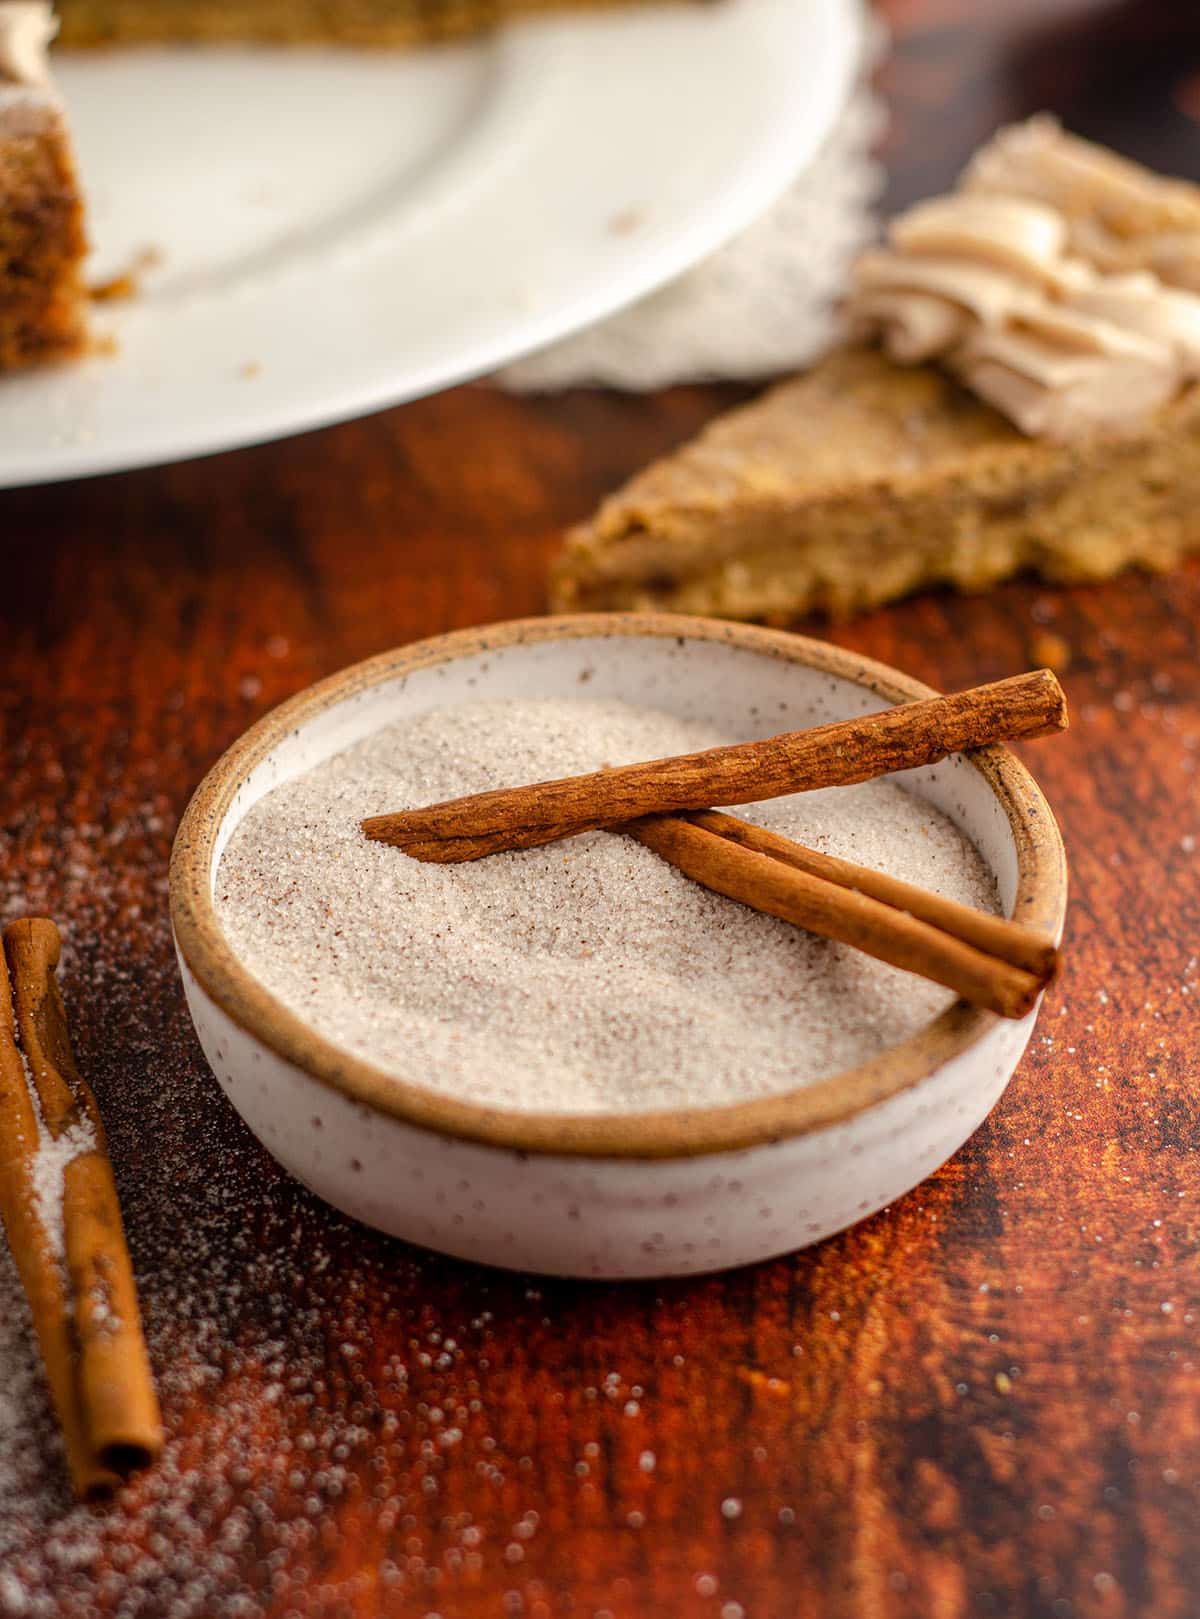 cinnamon and sugar and cinnamon sticks sitting in a ceramic bowl